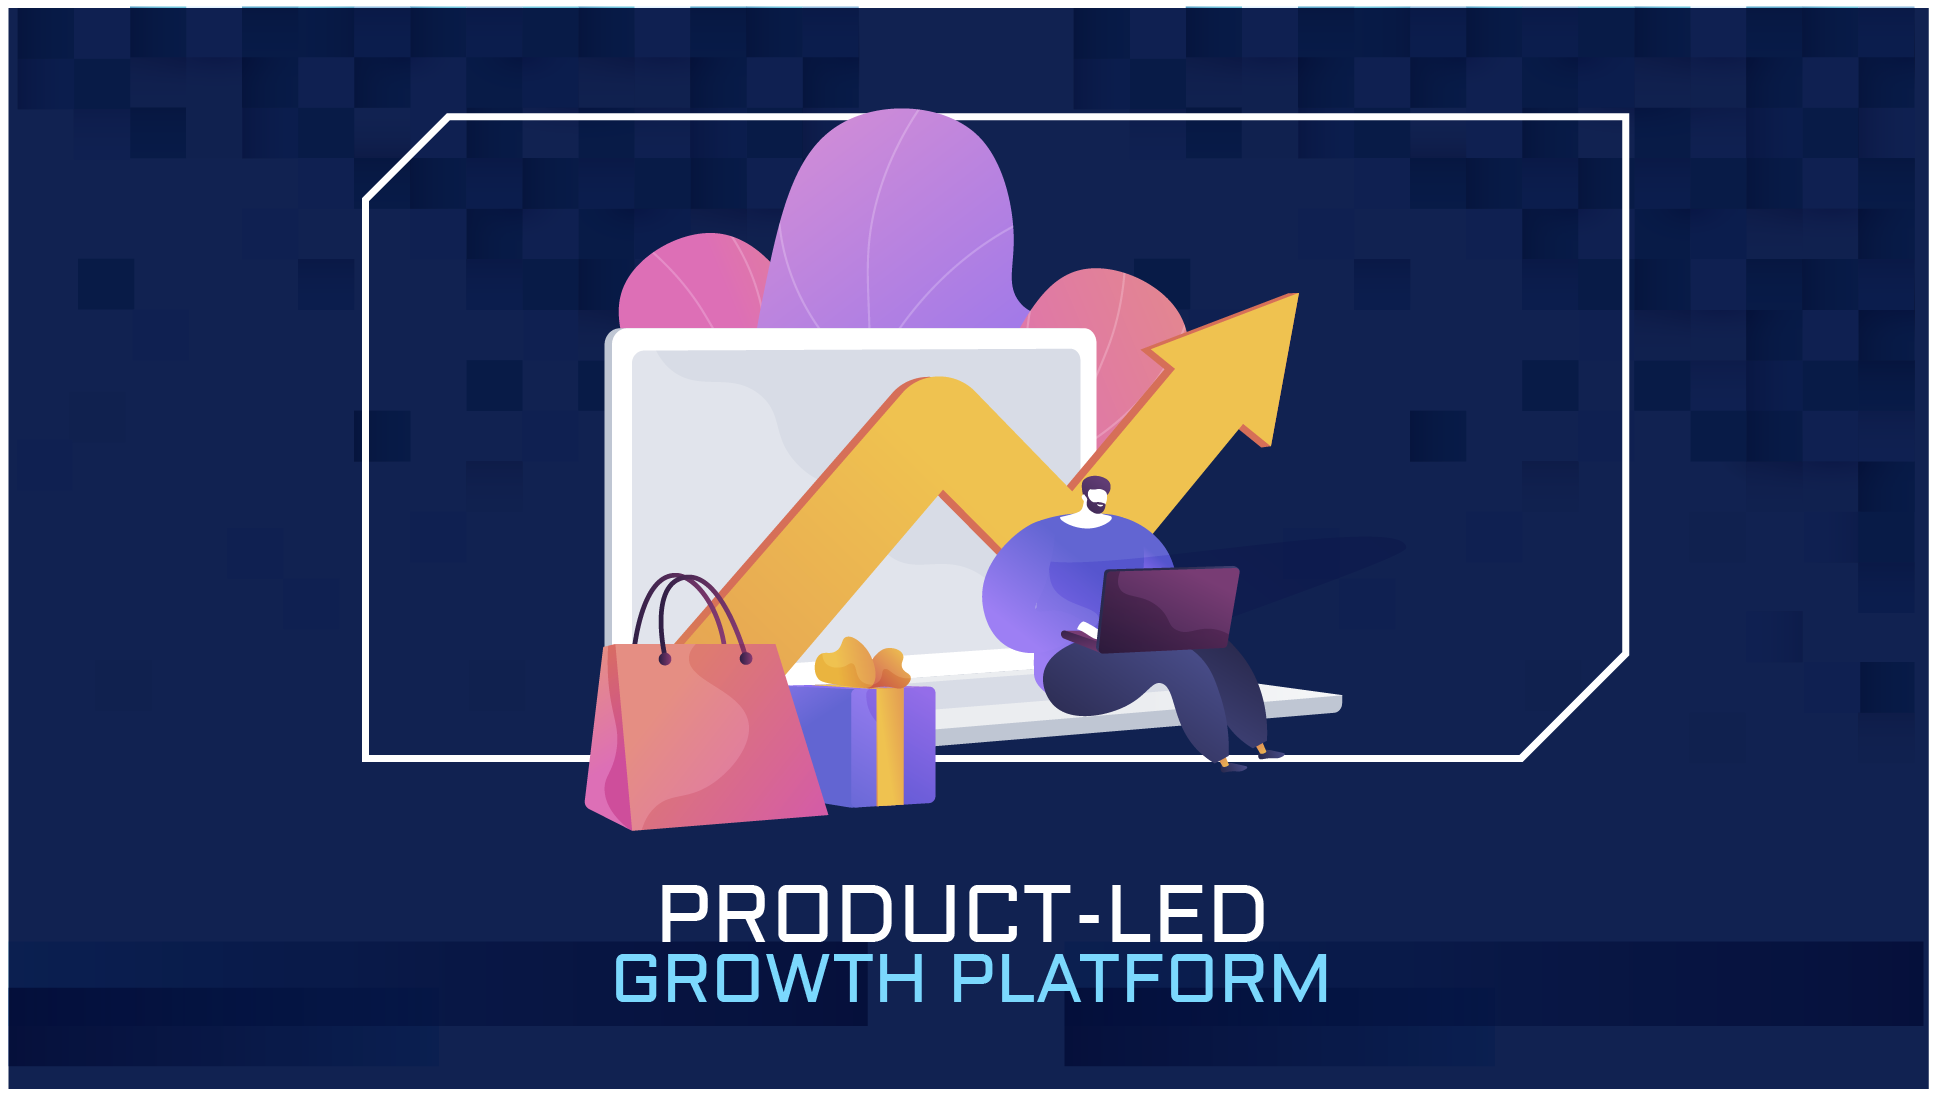 Product-led growth platform